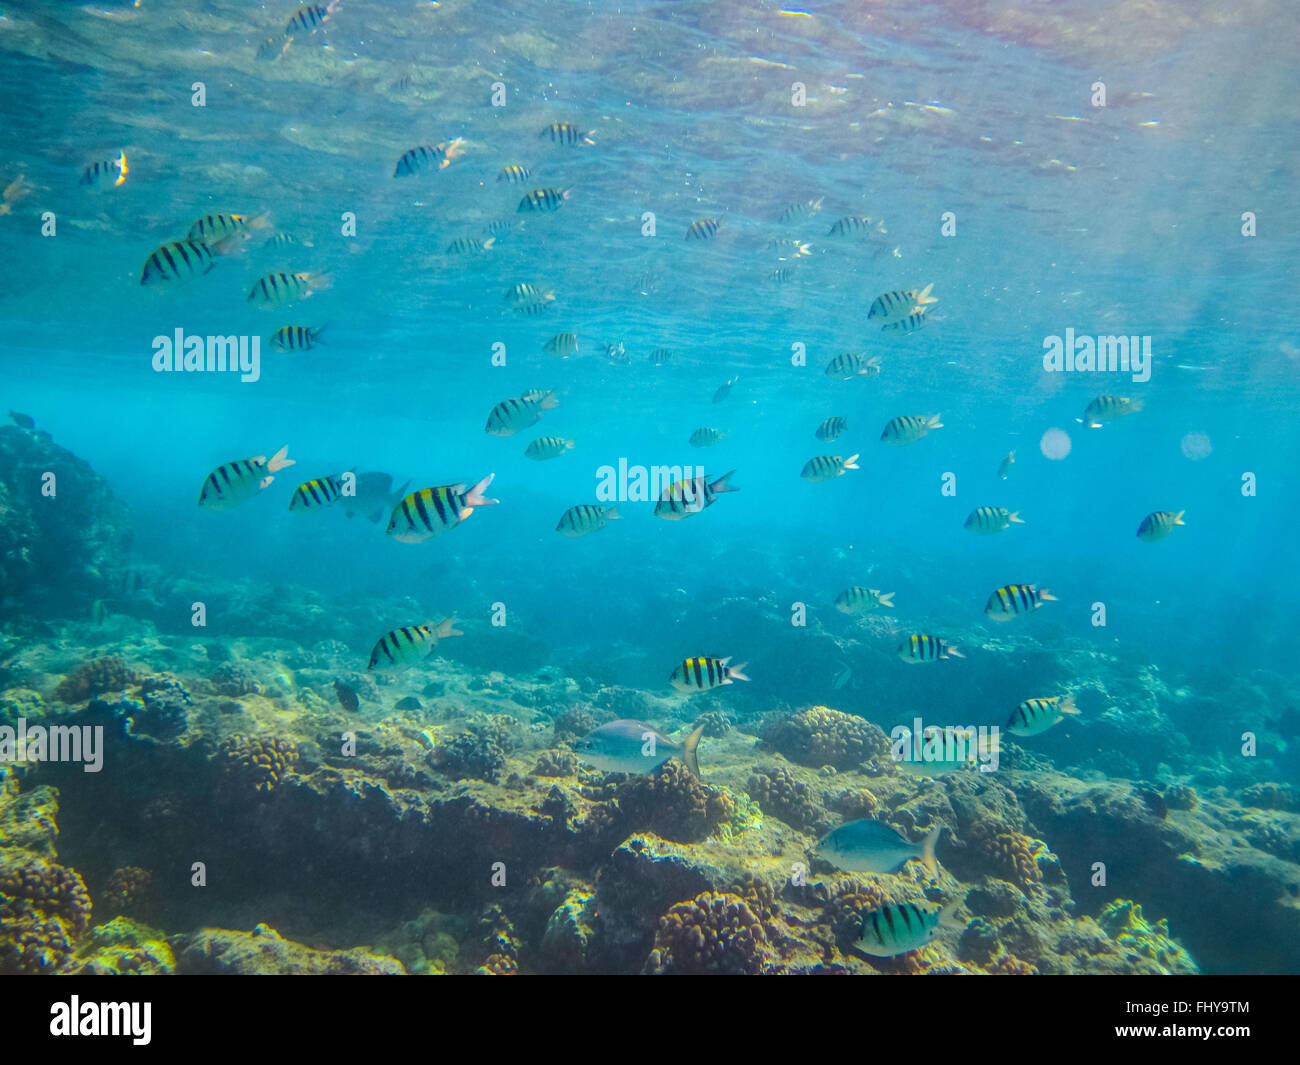 Underwater scene of striped fish in Hawaii Stock Photo